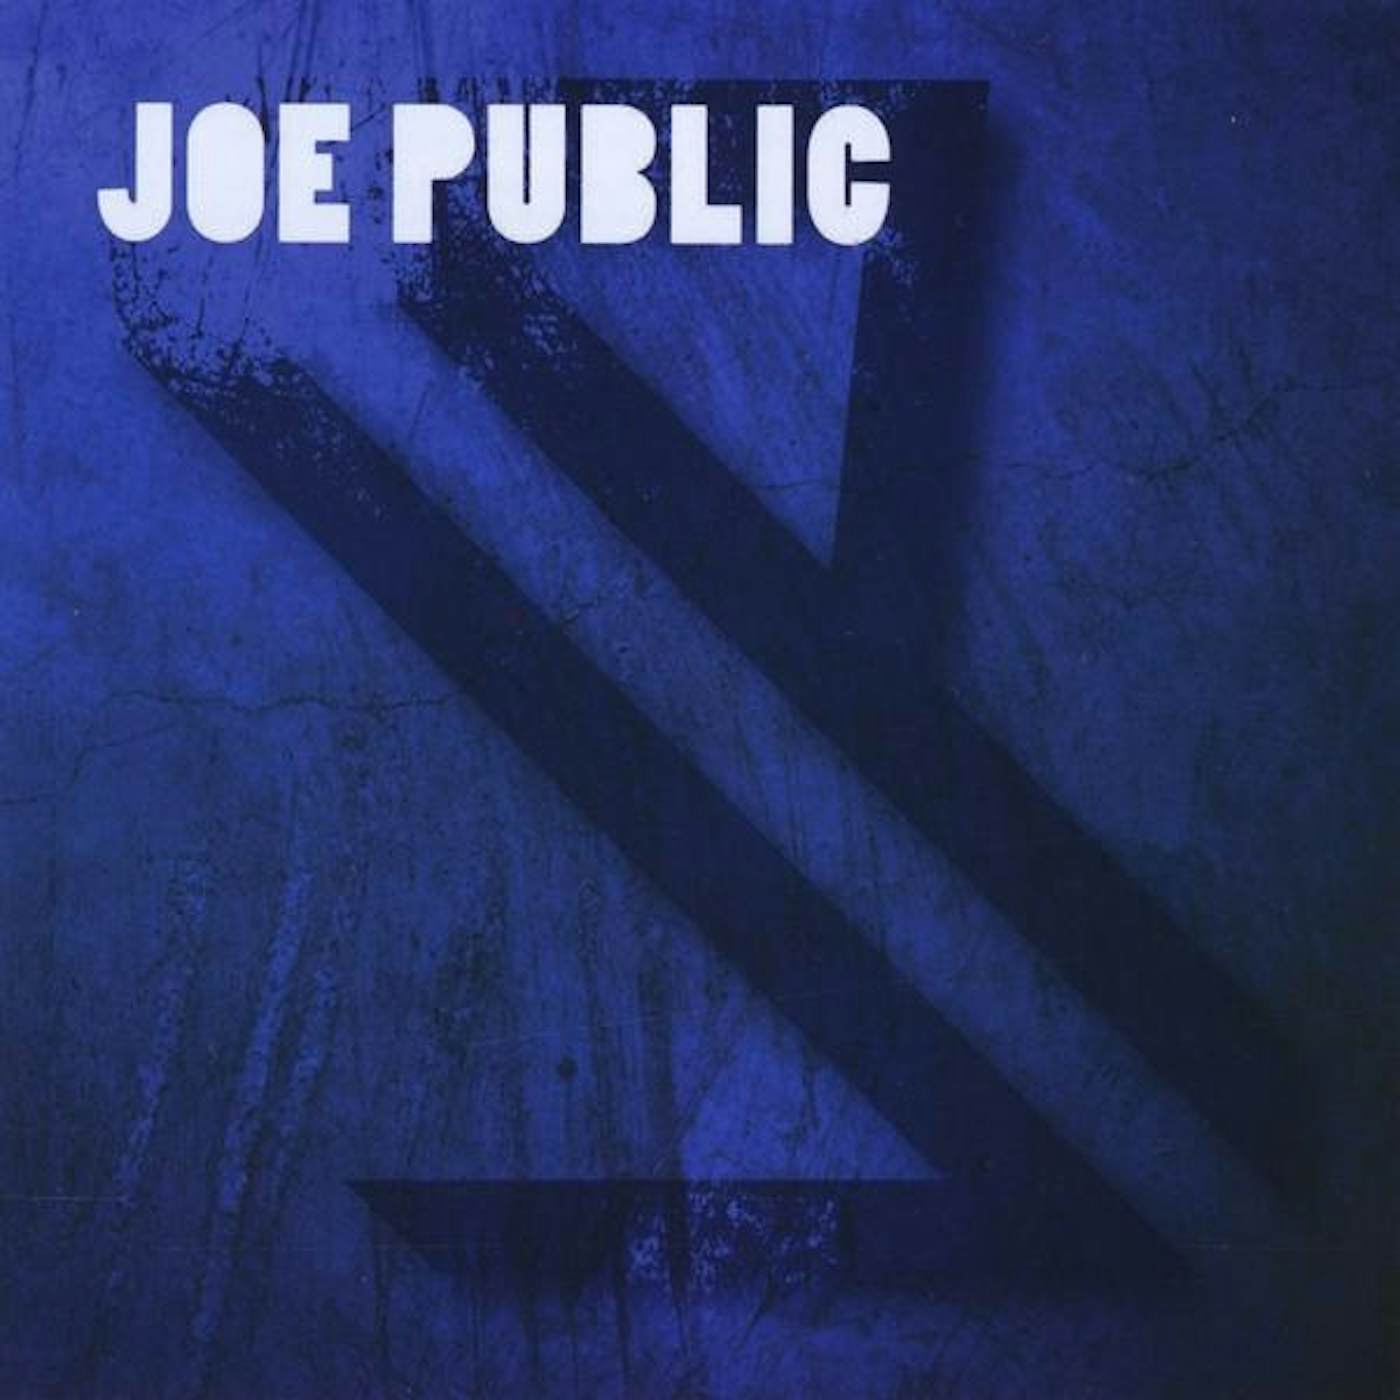 Joe Public IIV CD